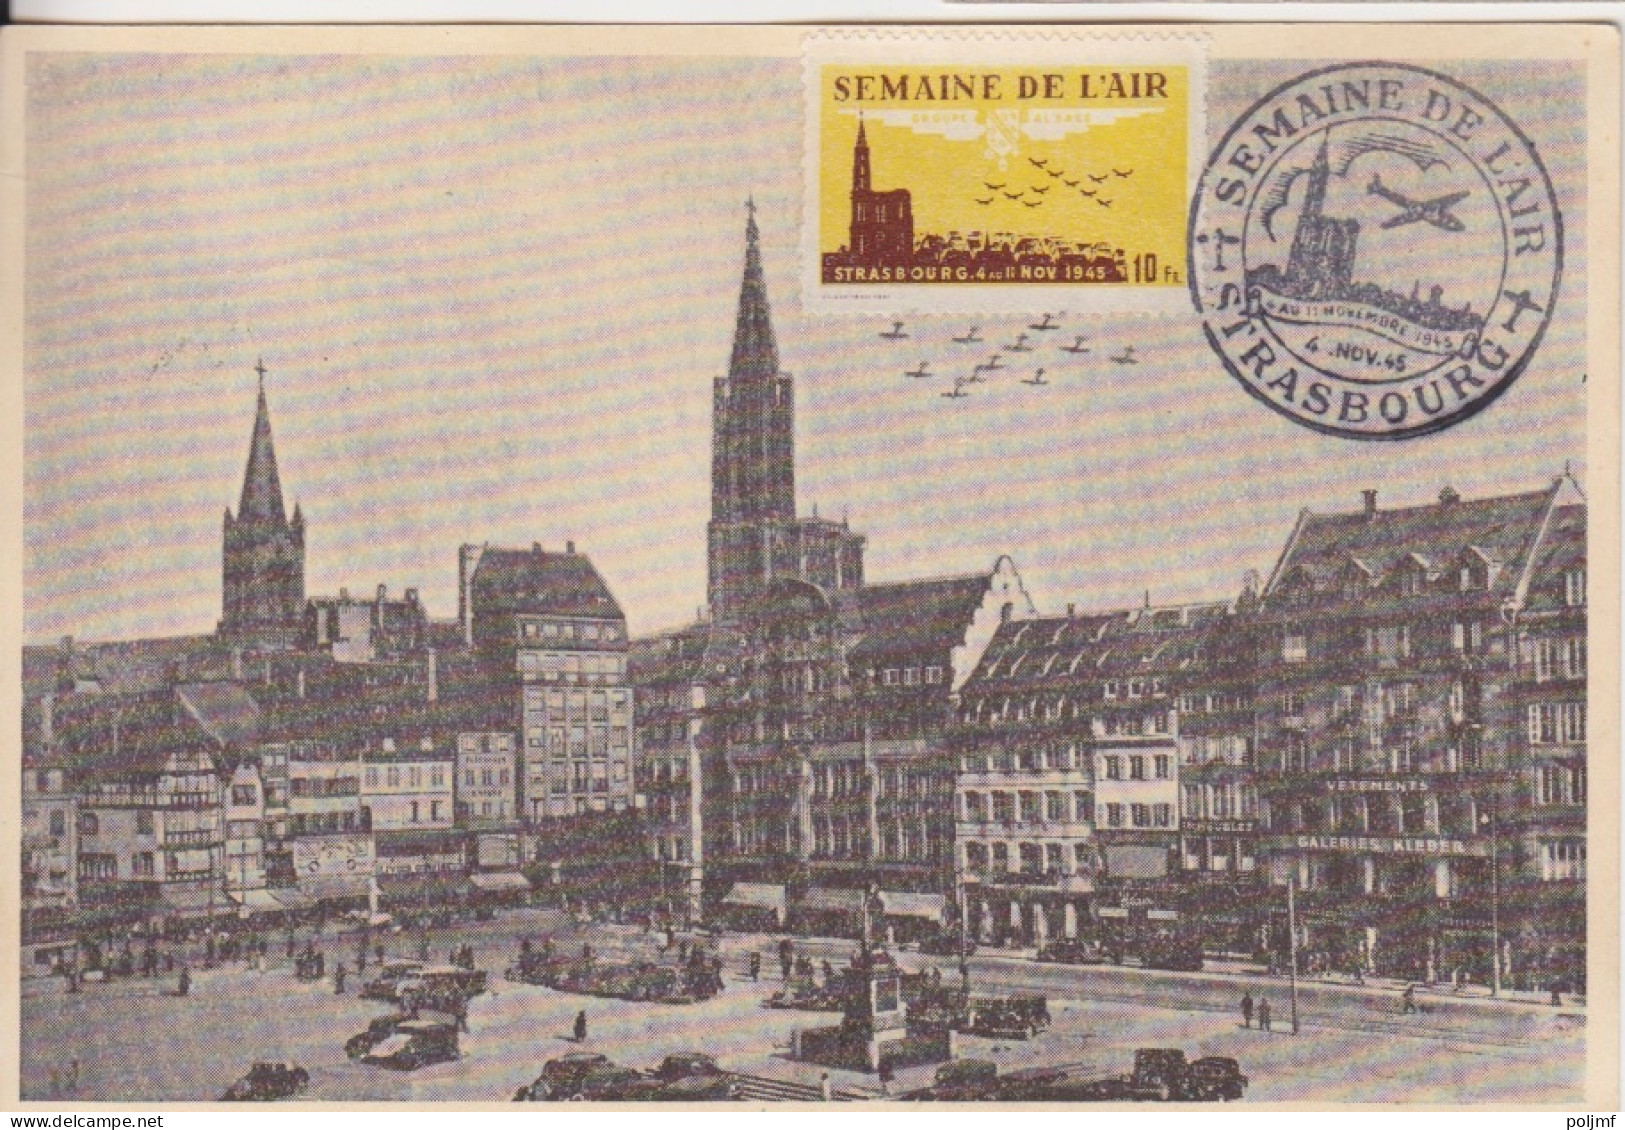 CP (Semaine De L'Air) Obl. GF Strasbourg Le 4 Nov 45 Sur 1f50 Dulac Rose N° 691 + Vignette Semaine De L'Air - 1944-45 Marianne Of Dulac